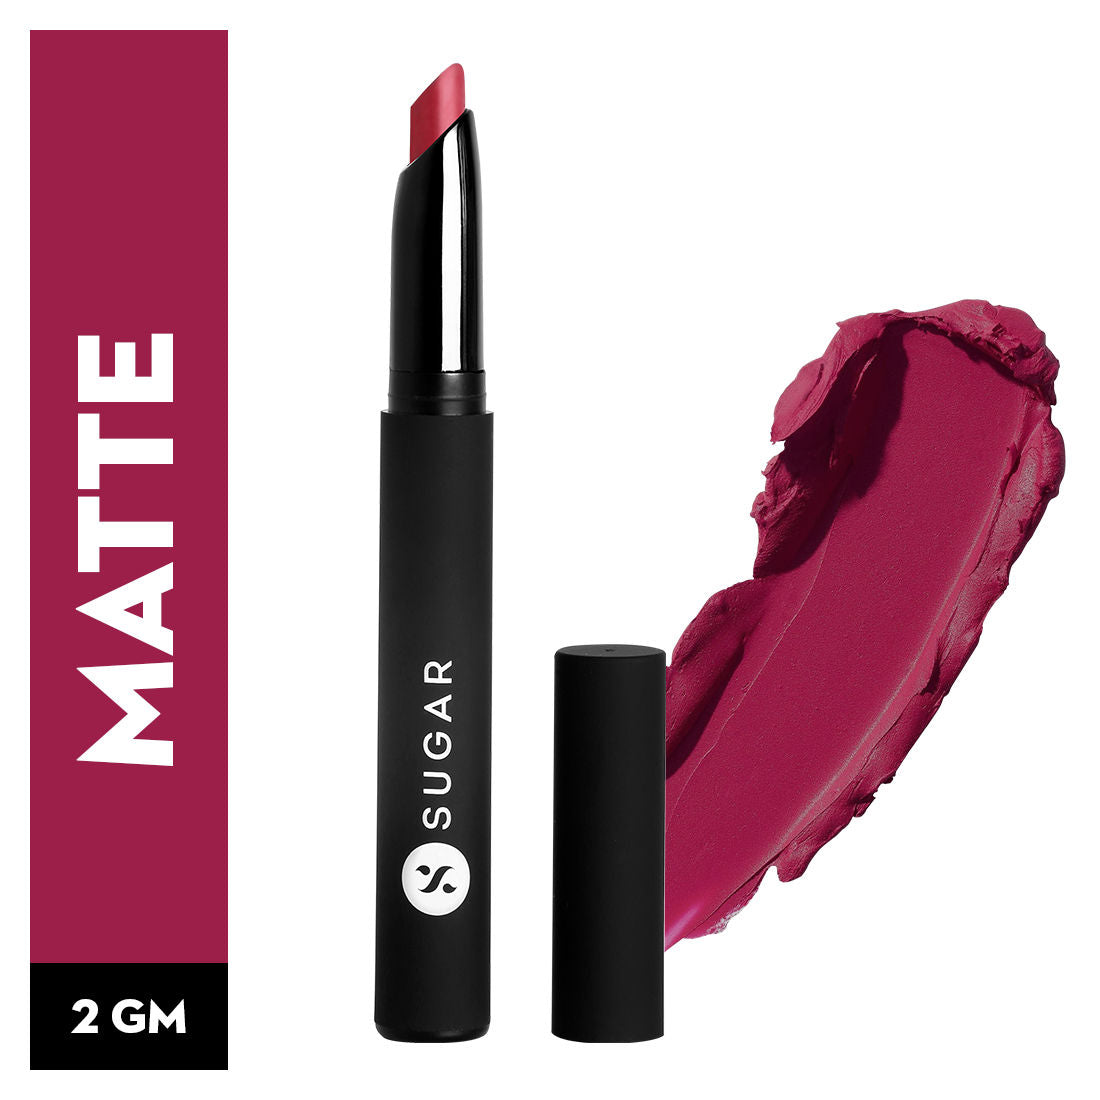 Sugar Matte Attack Transferproof Lipstick - 01 Bold Play (Cardinal Pink) (2G)